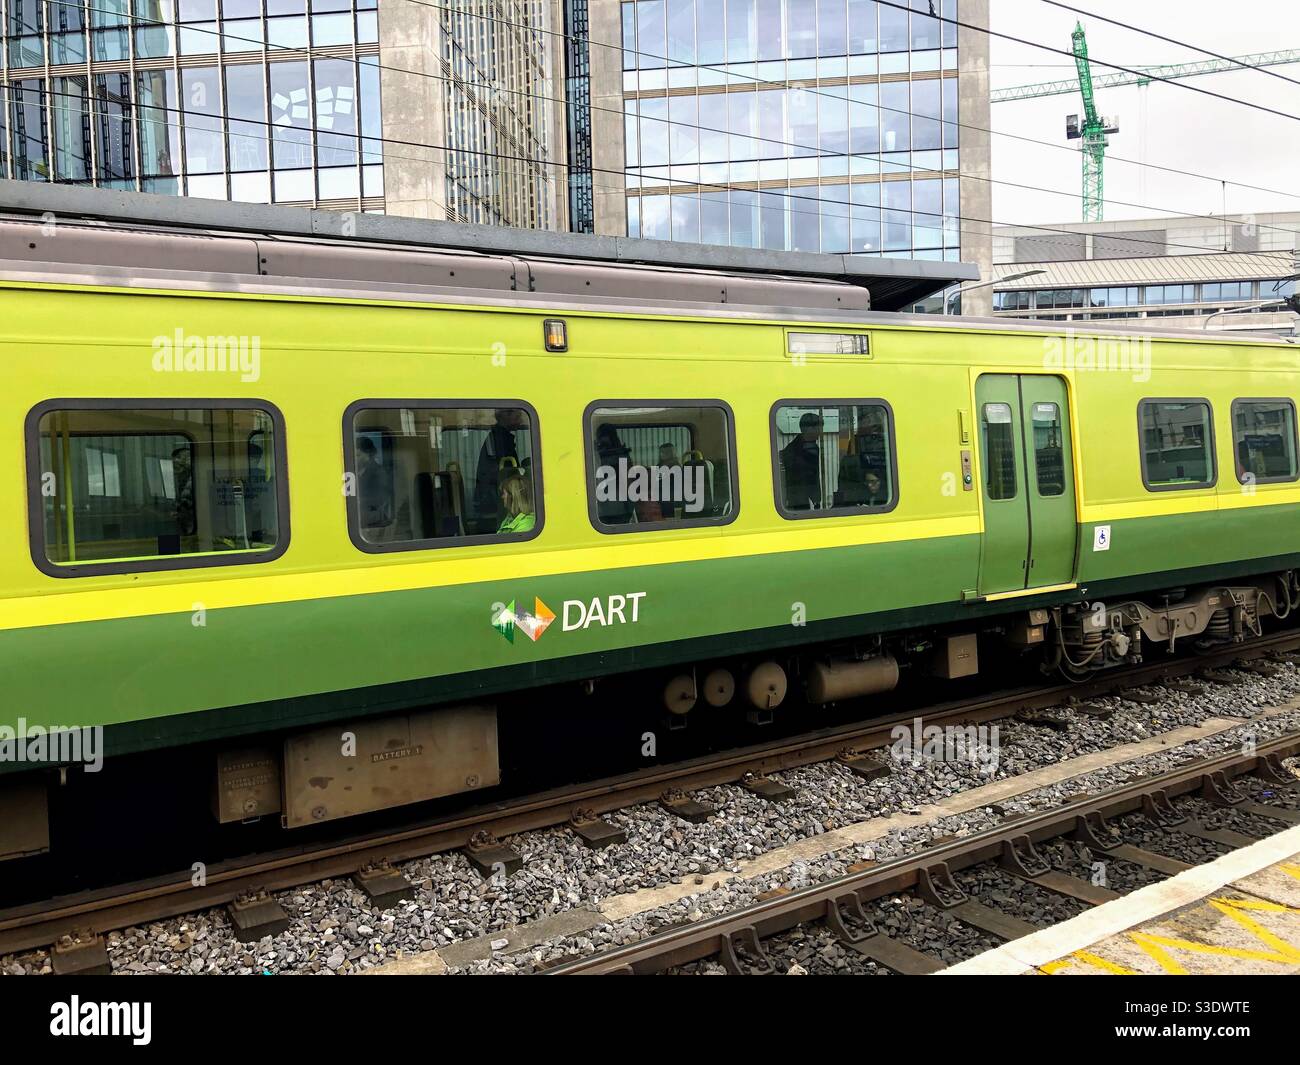 Dart train carriage, Dublin, Ireland Stock Photo - Alamy